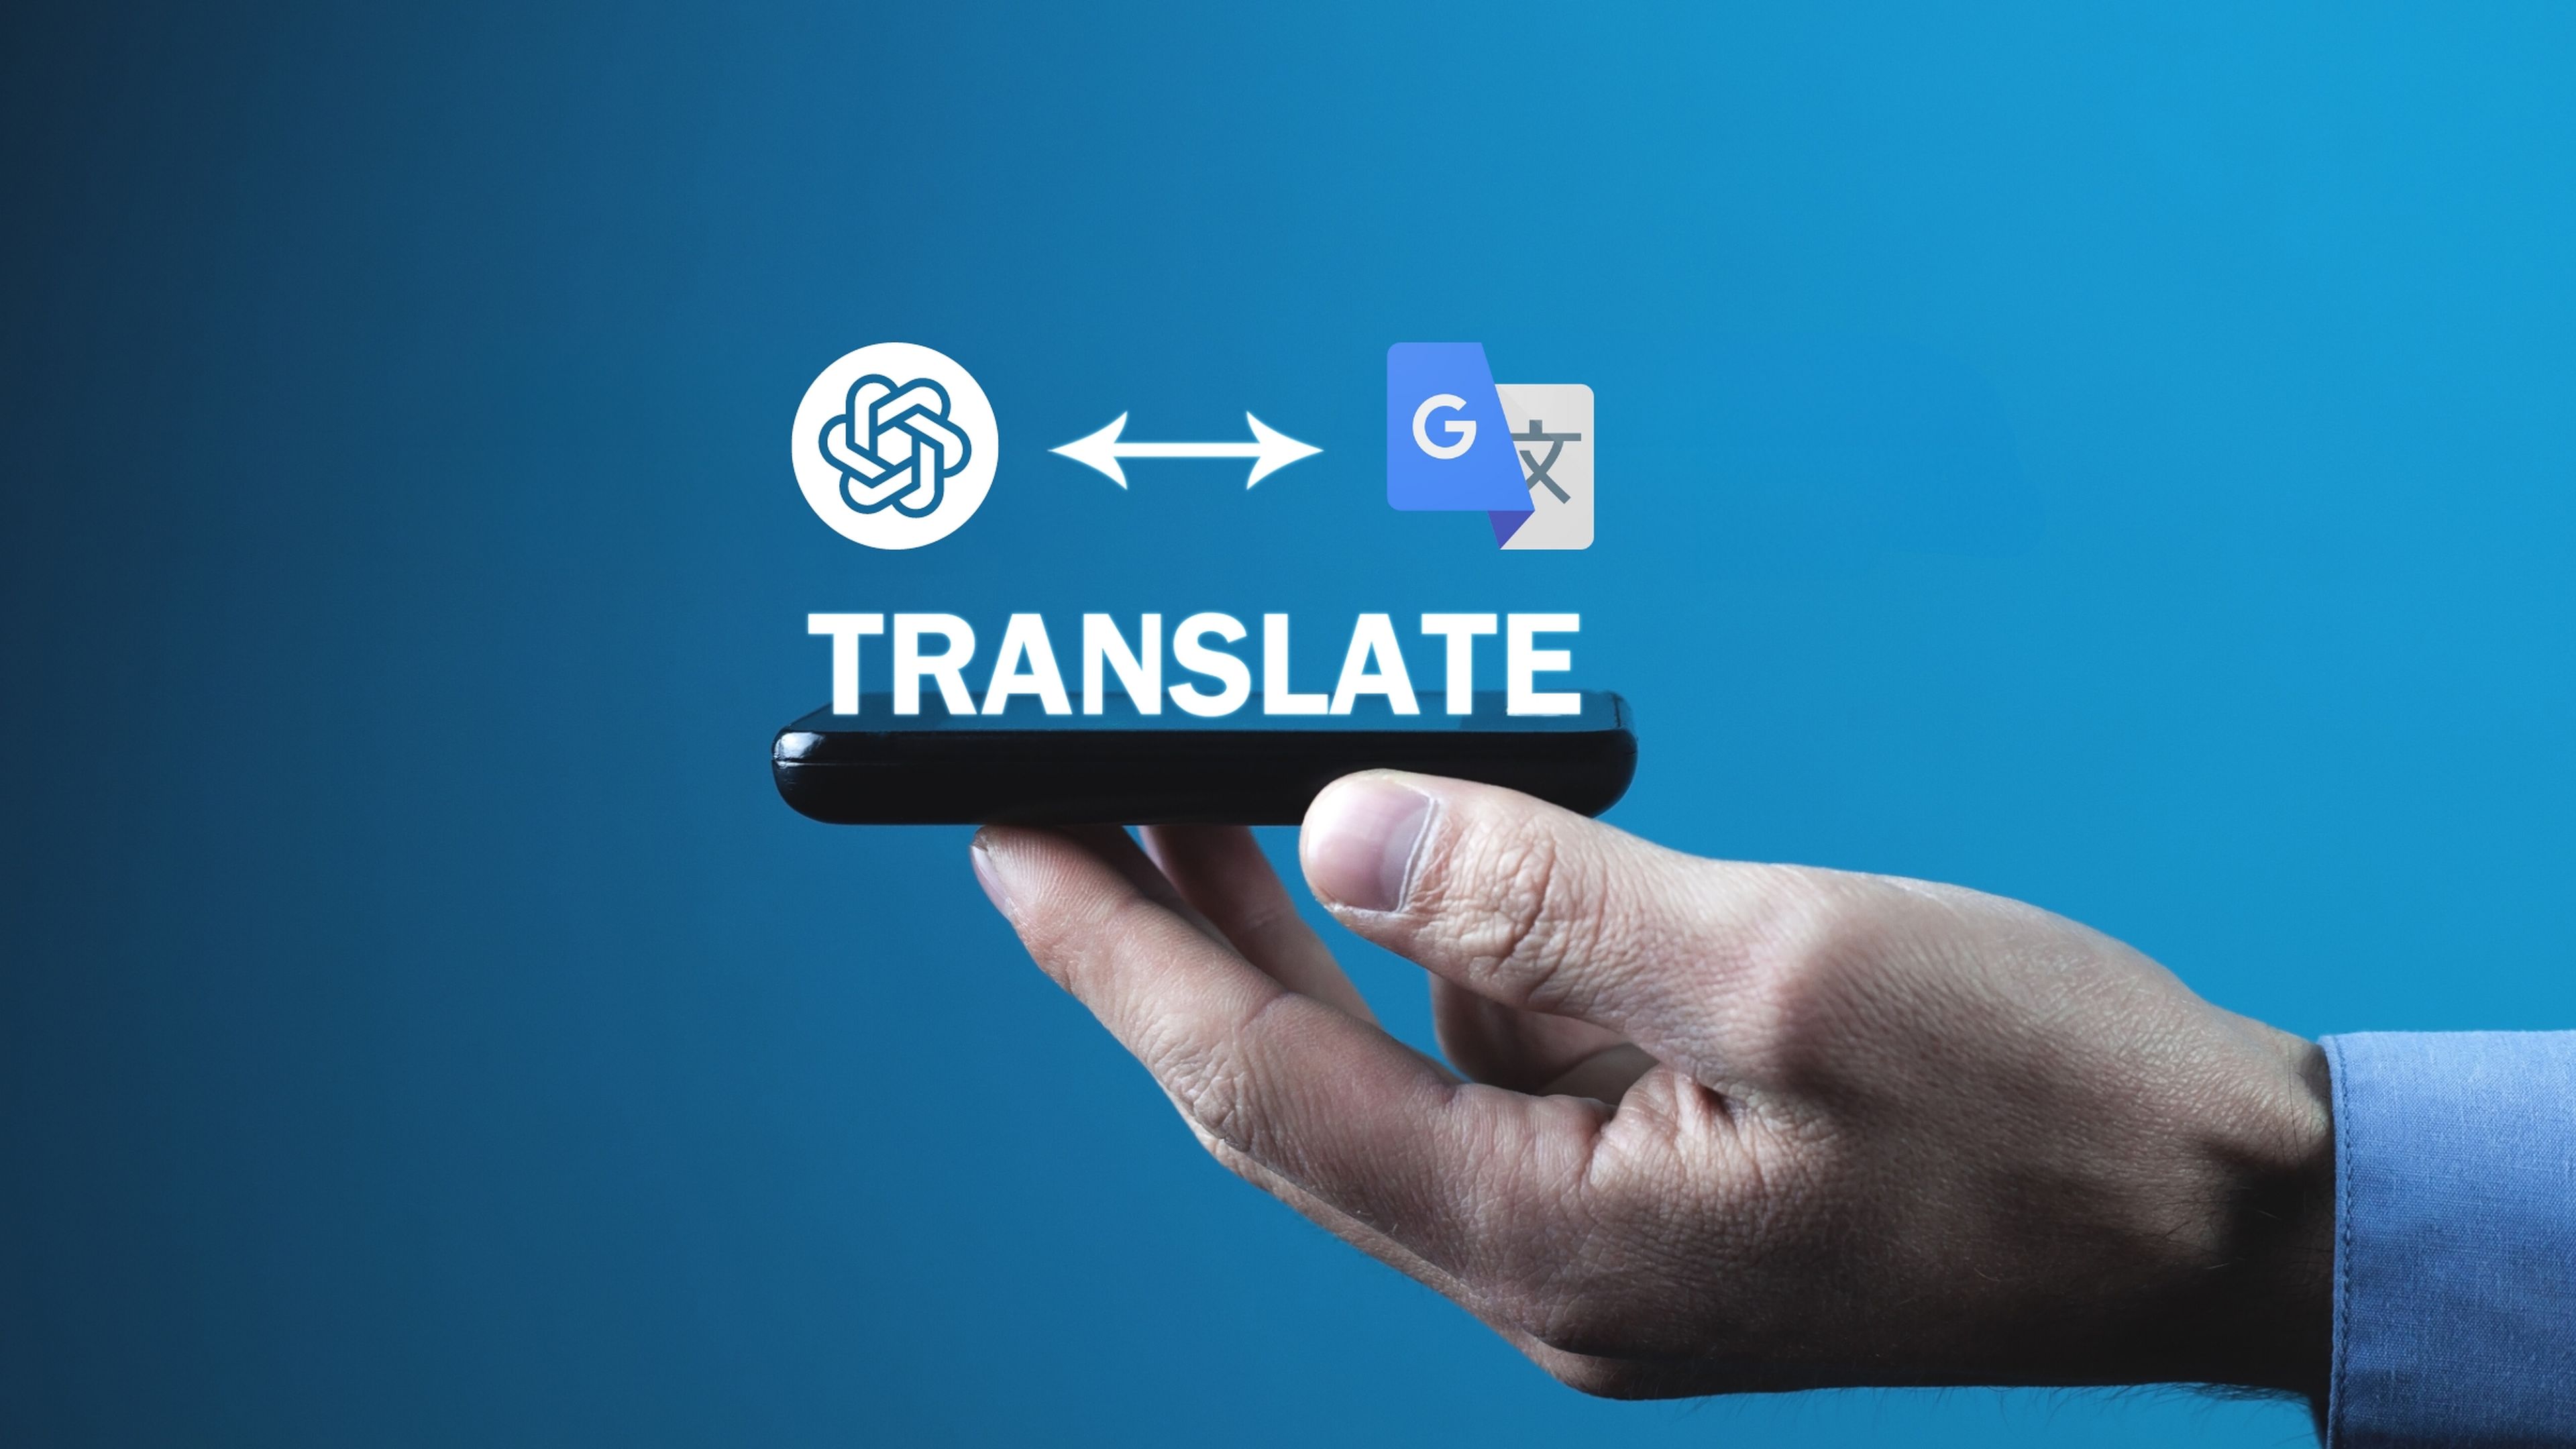 ChatGPT o Google Translate: ¿Cuál es mejor para traducir textos?